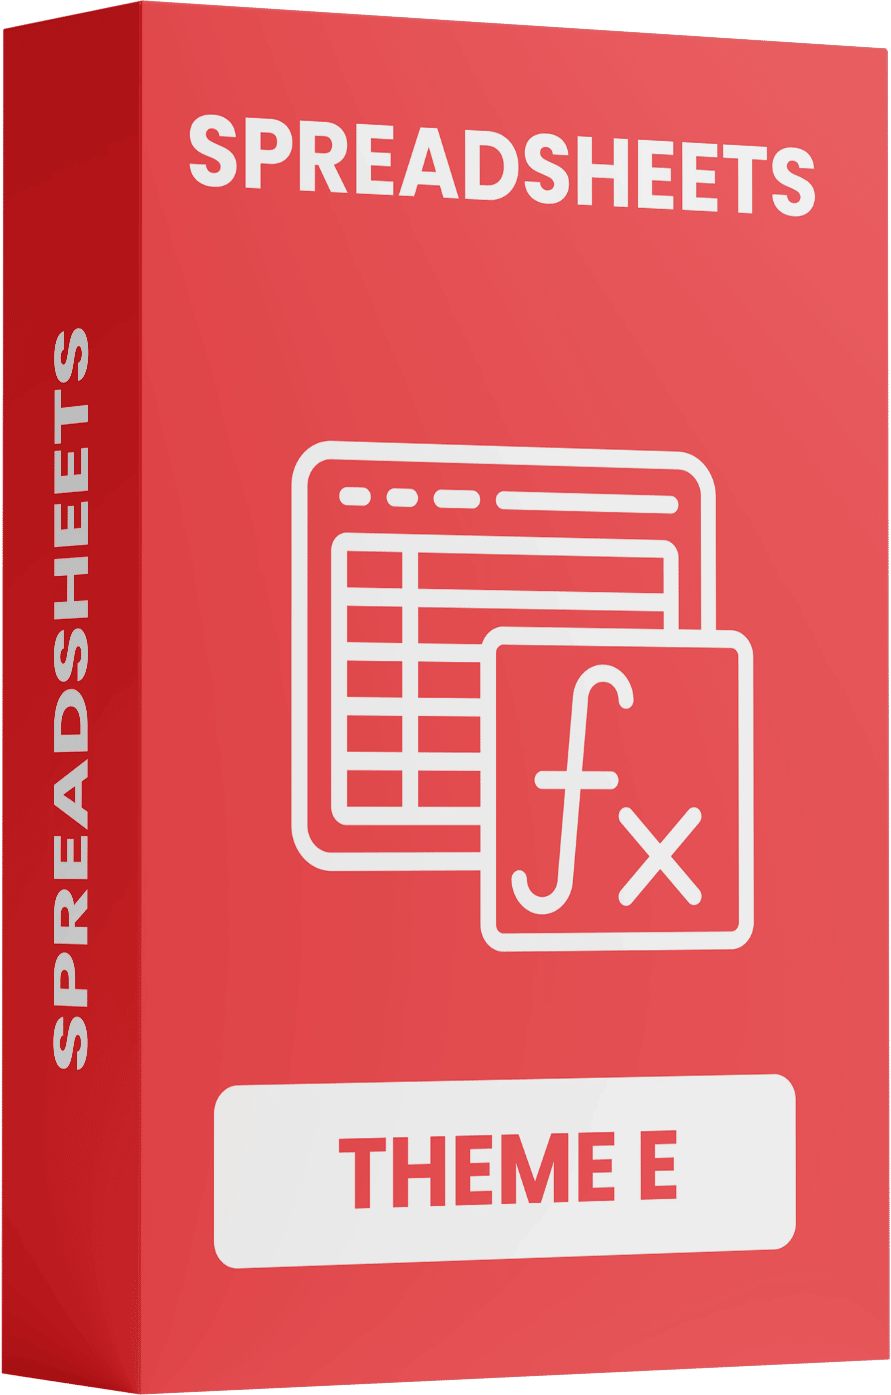 SierraChart - Theme E - Spreadsheets - eBook